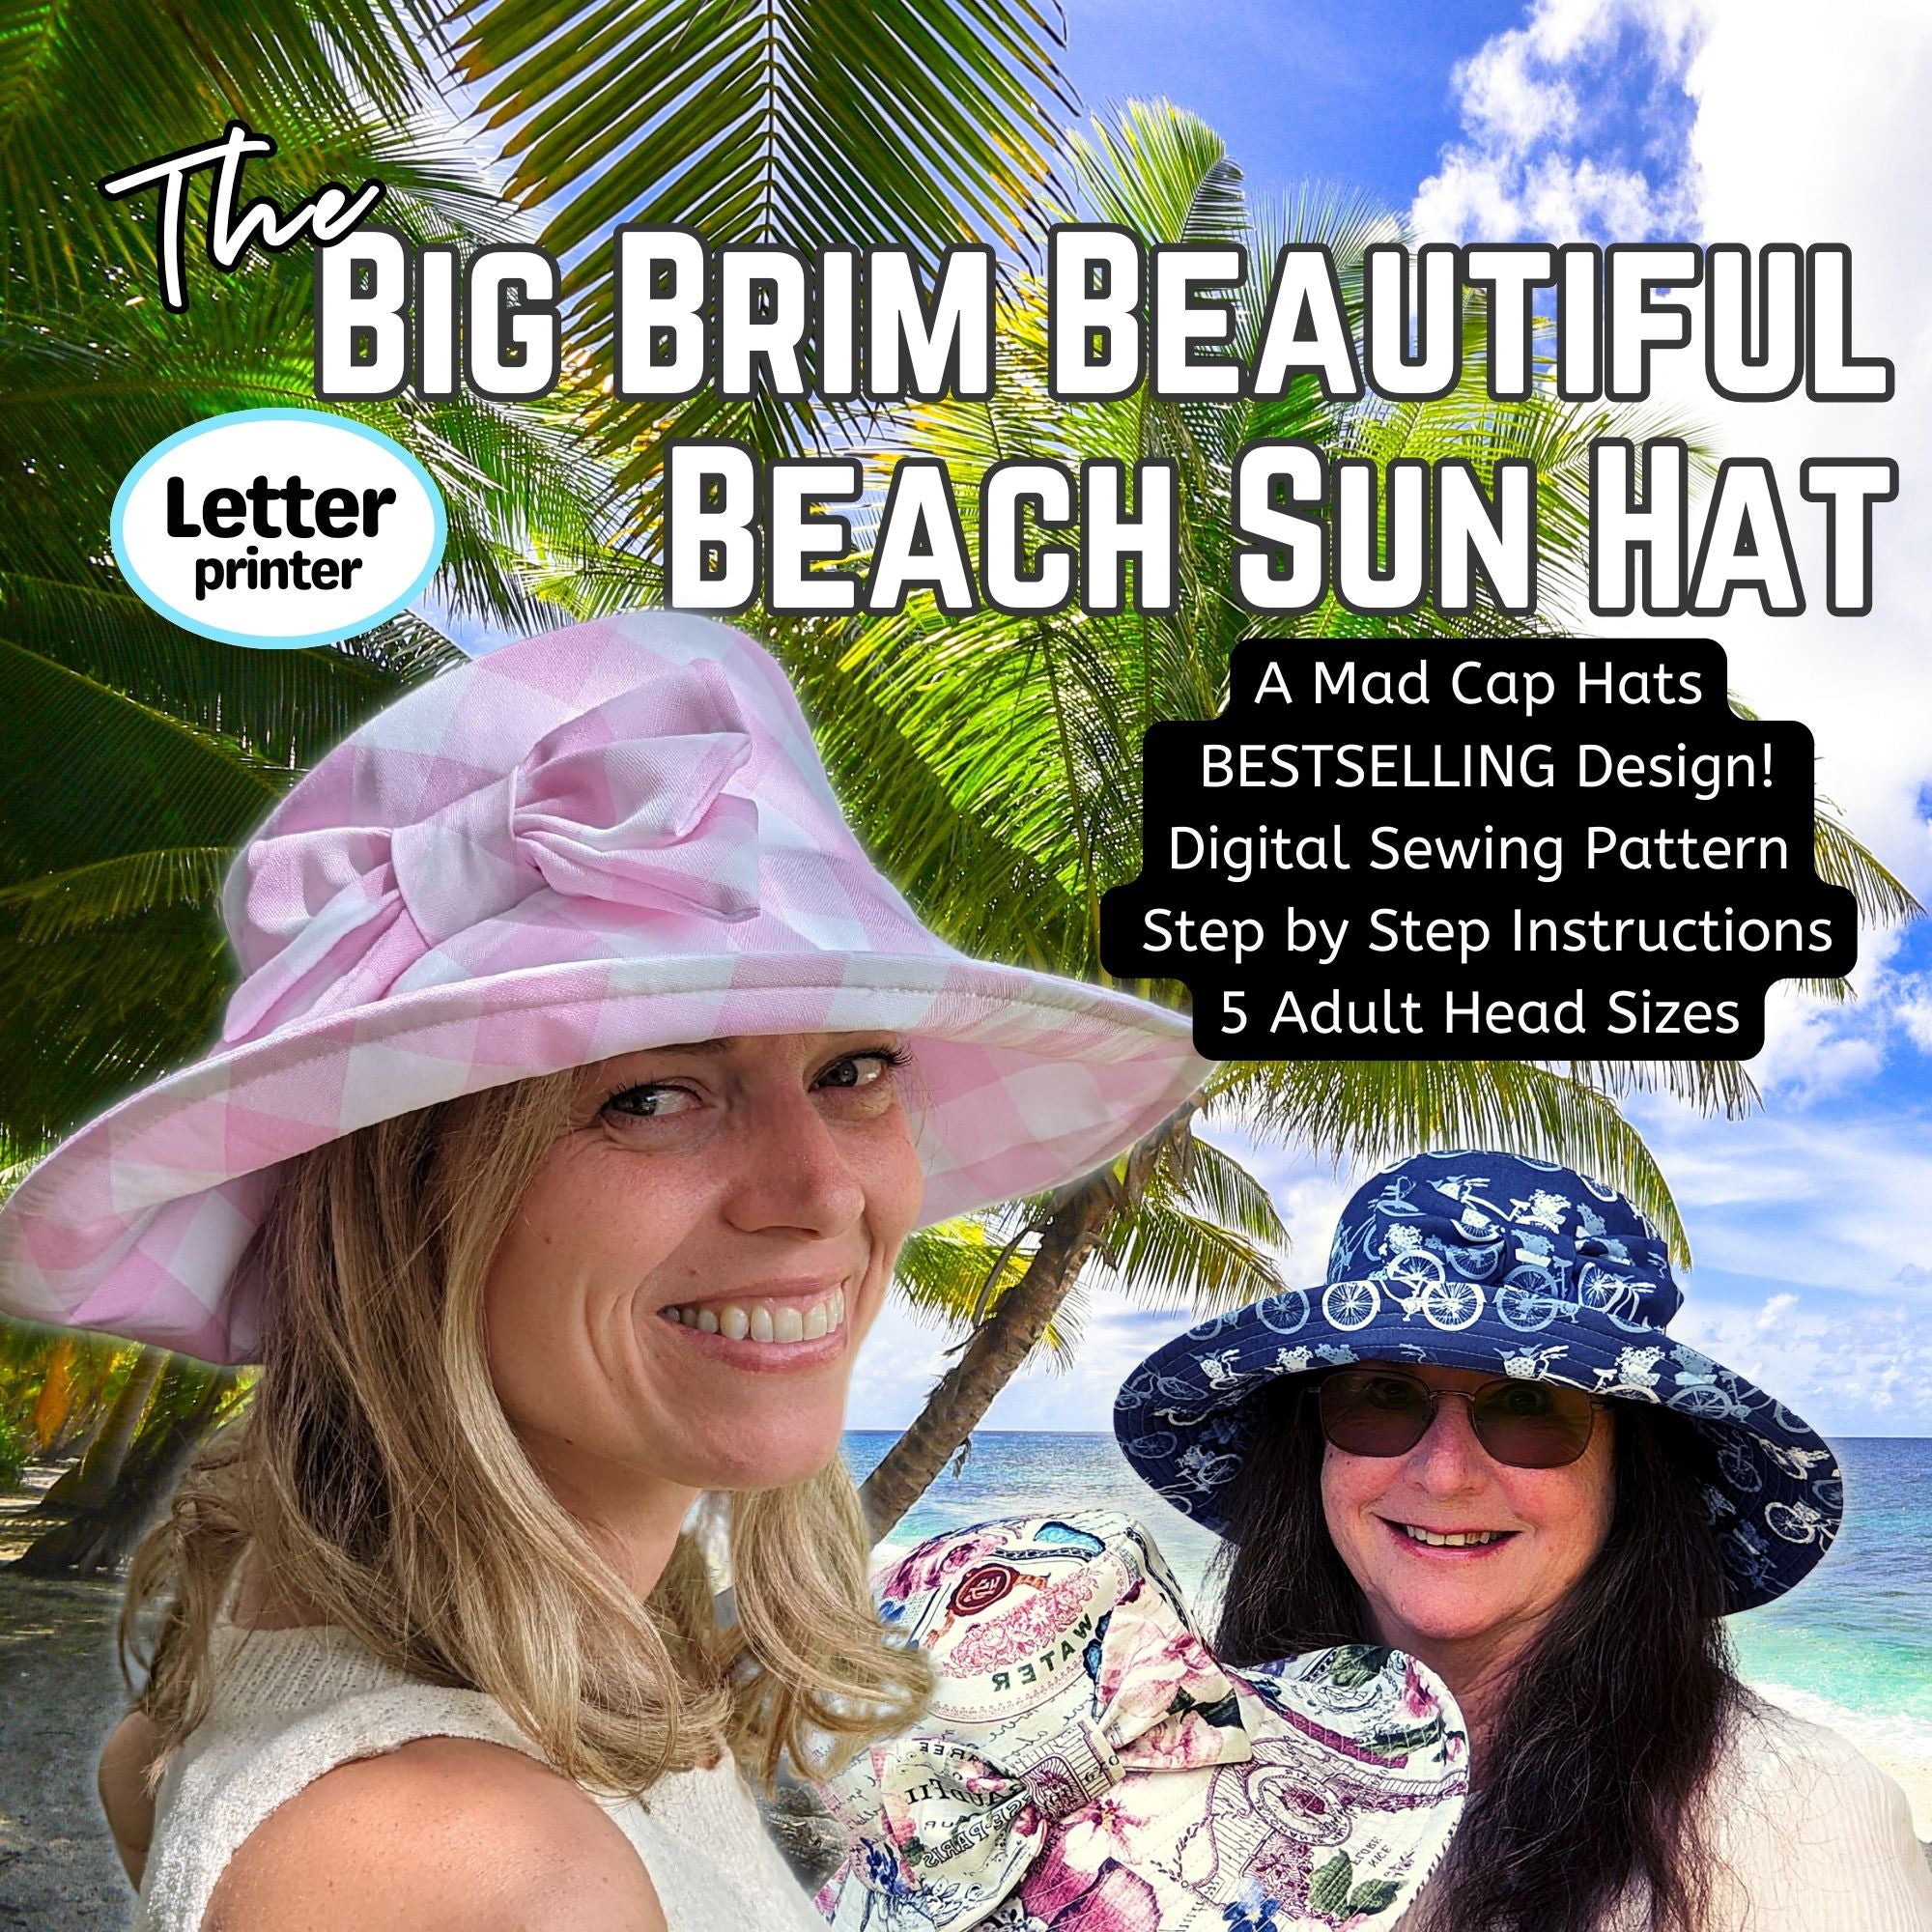 Big Brim Beautiful Beach Sun Hat, sewing pattern and instructions